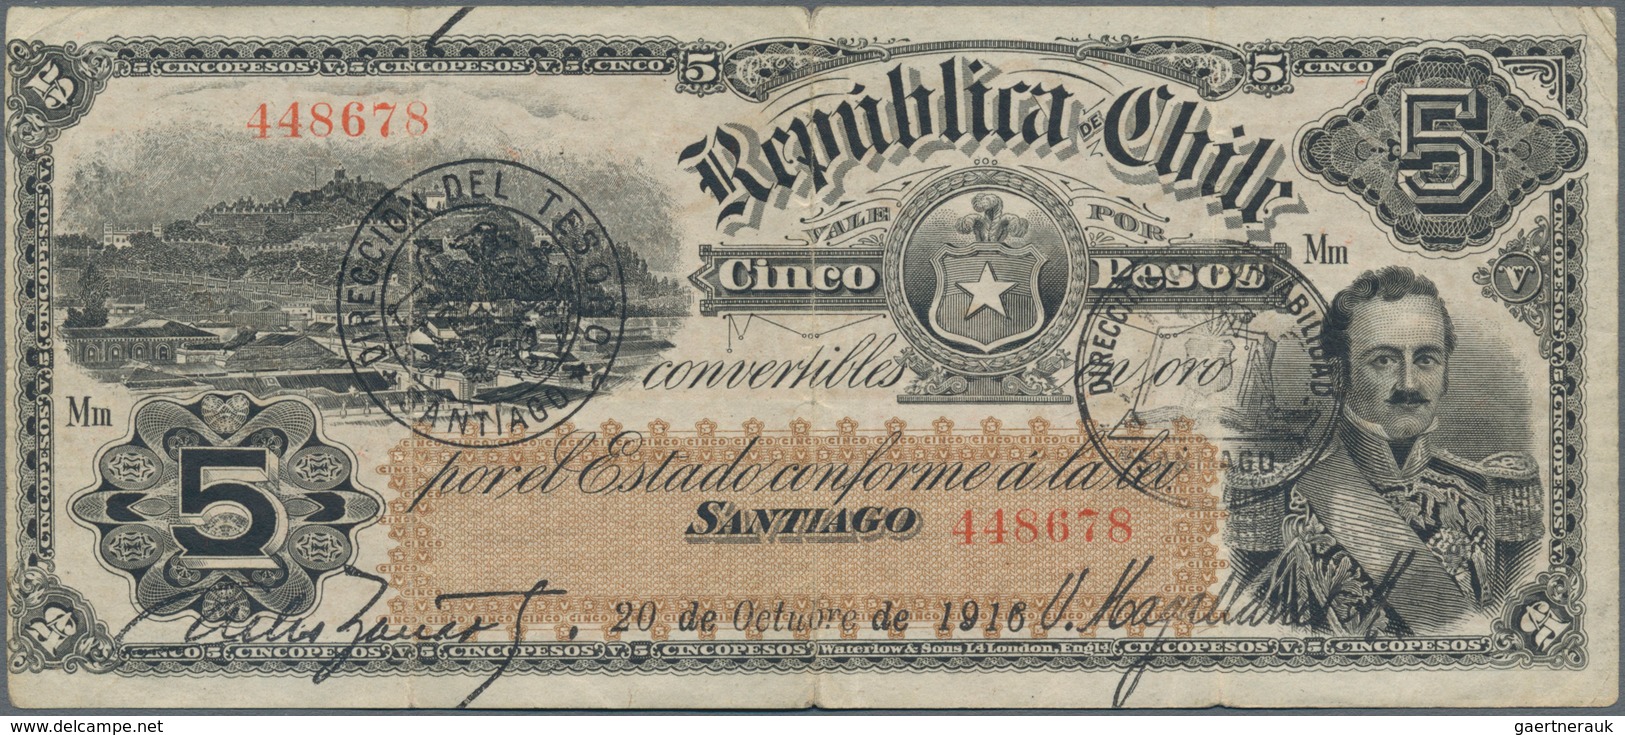 Chile: Republica De Chile 5 Pesos 1916, P.18b, Great Original Shape And Rare Early Issue, Tiny Margi - Chile